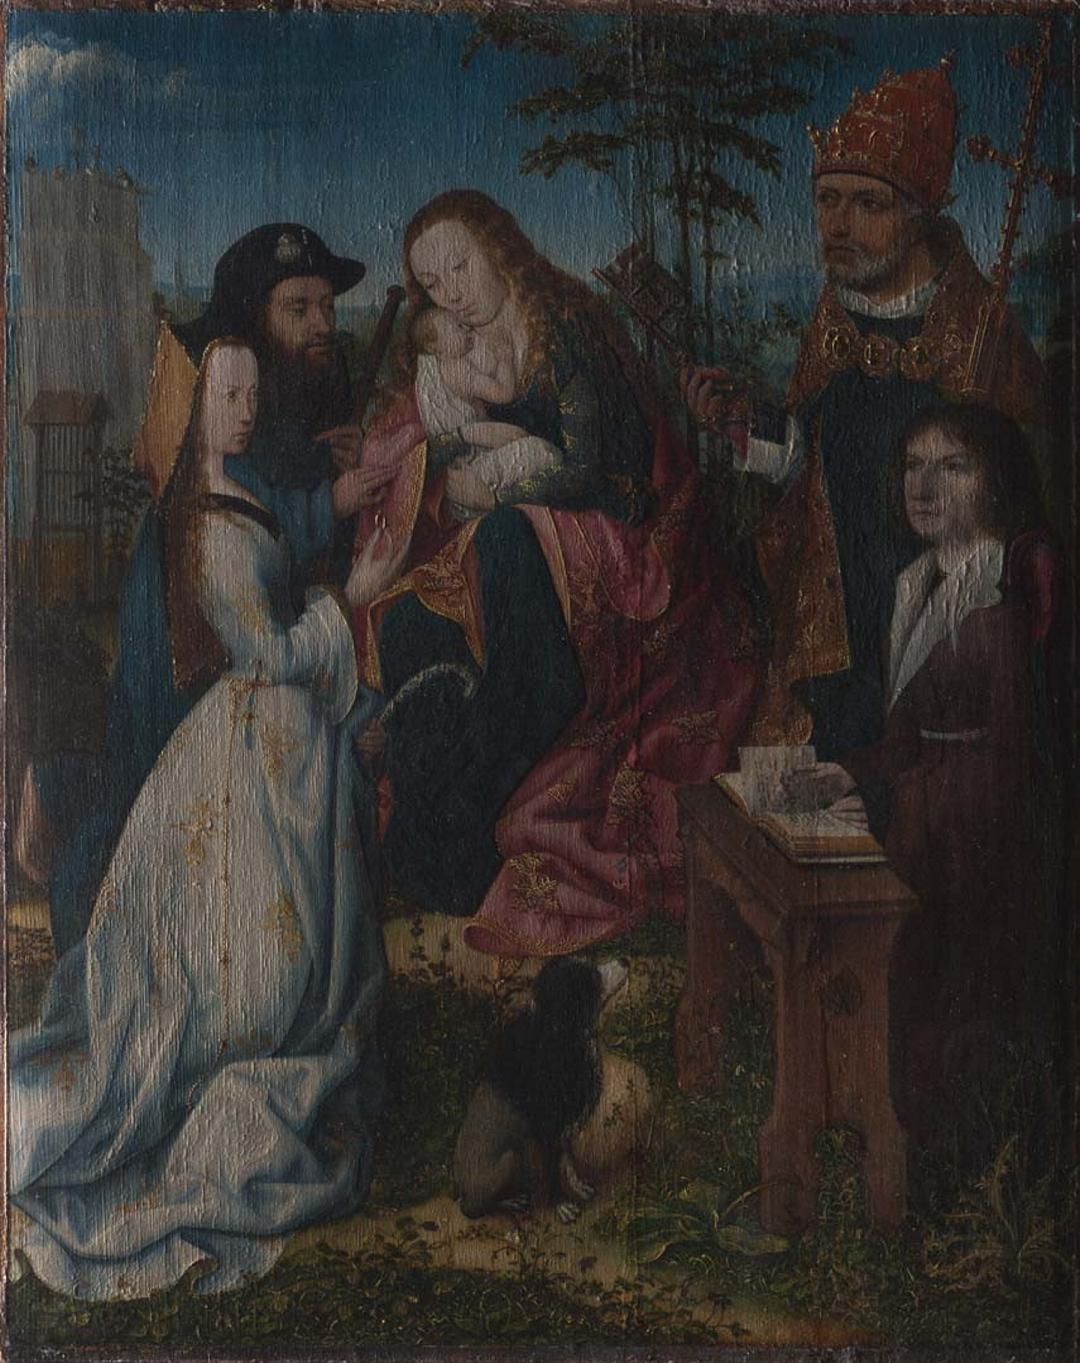 Slider: Raking light, Virgin and Child with Saint James the Pilgrim, Saint Catherine and the Donor with Saint Peter c.1496